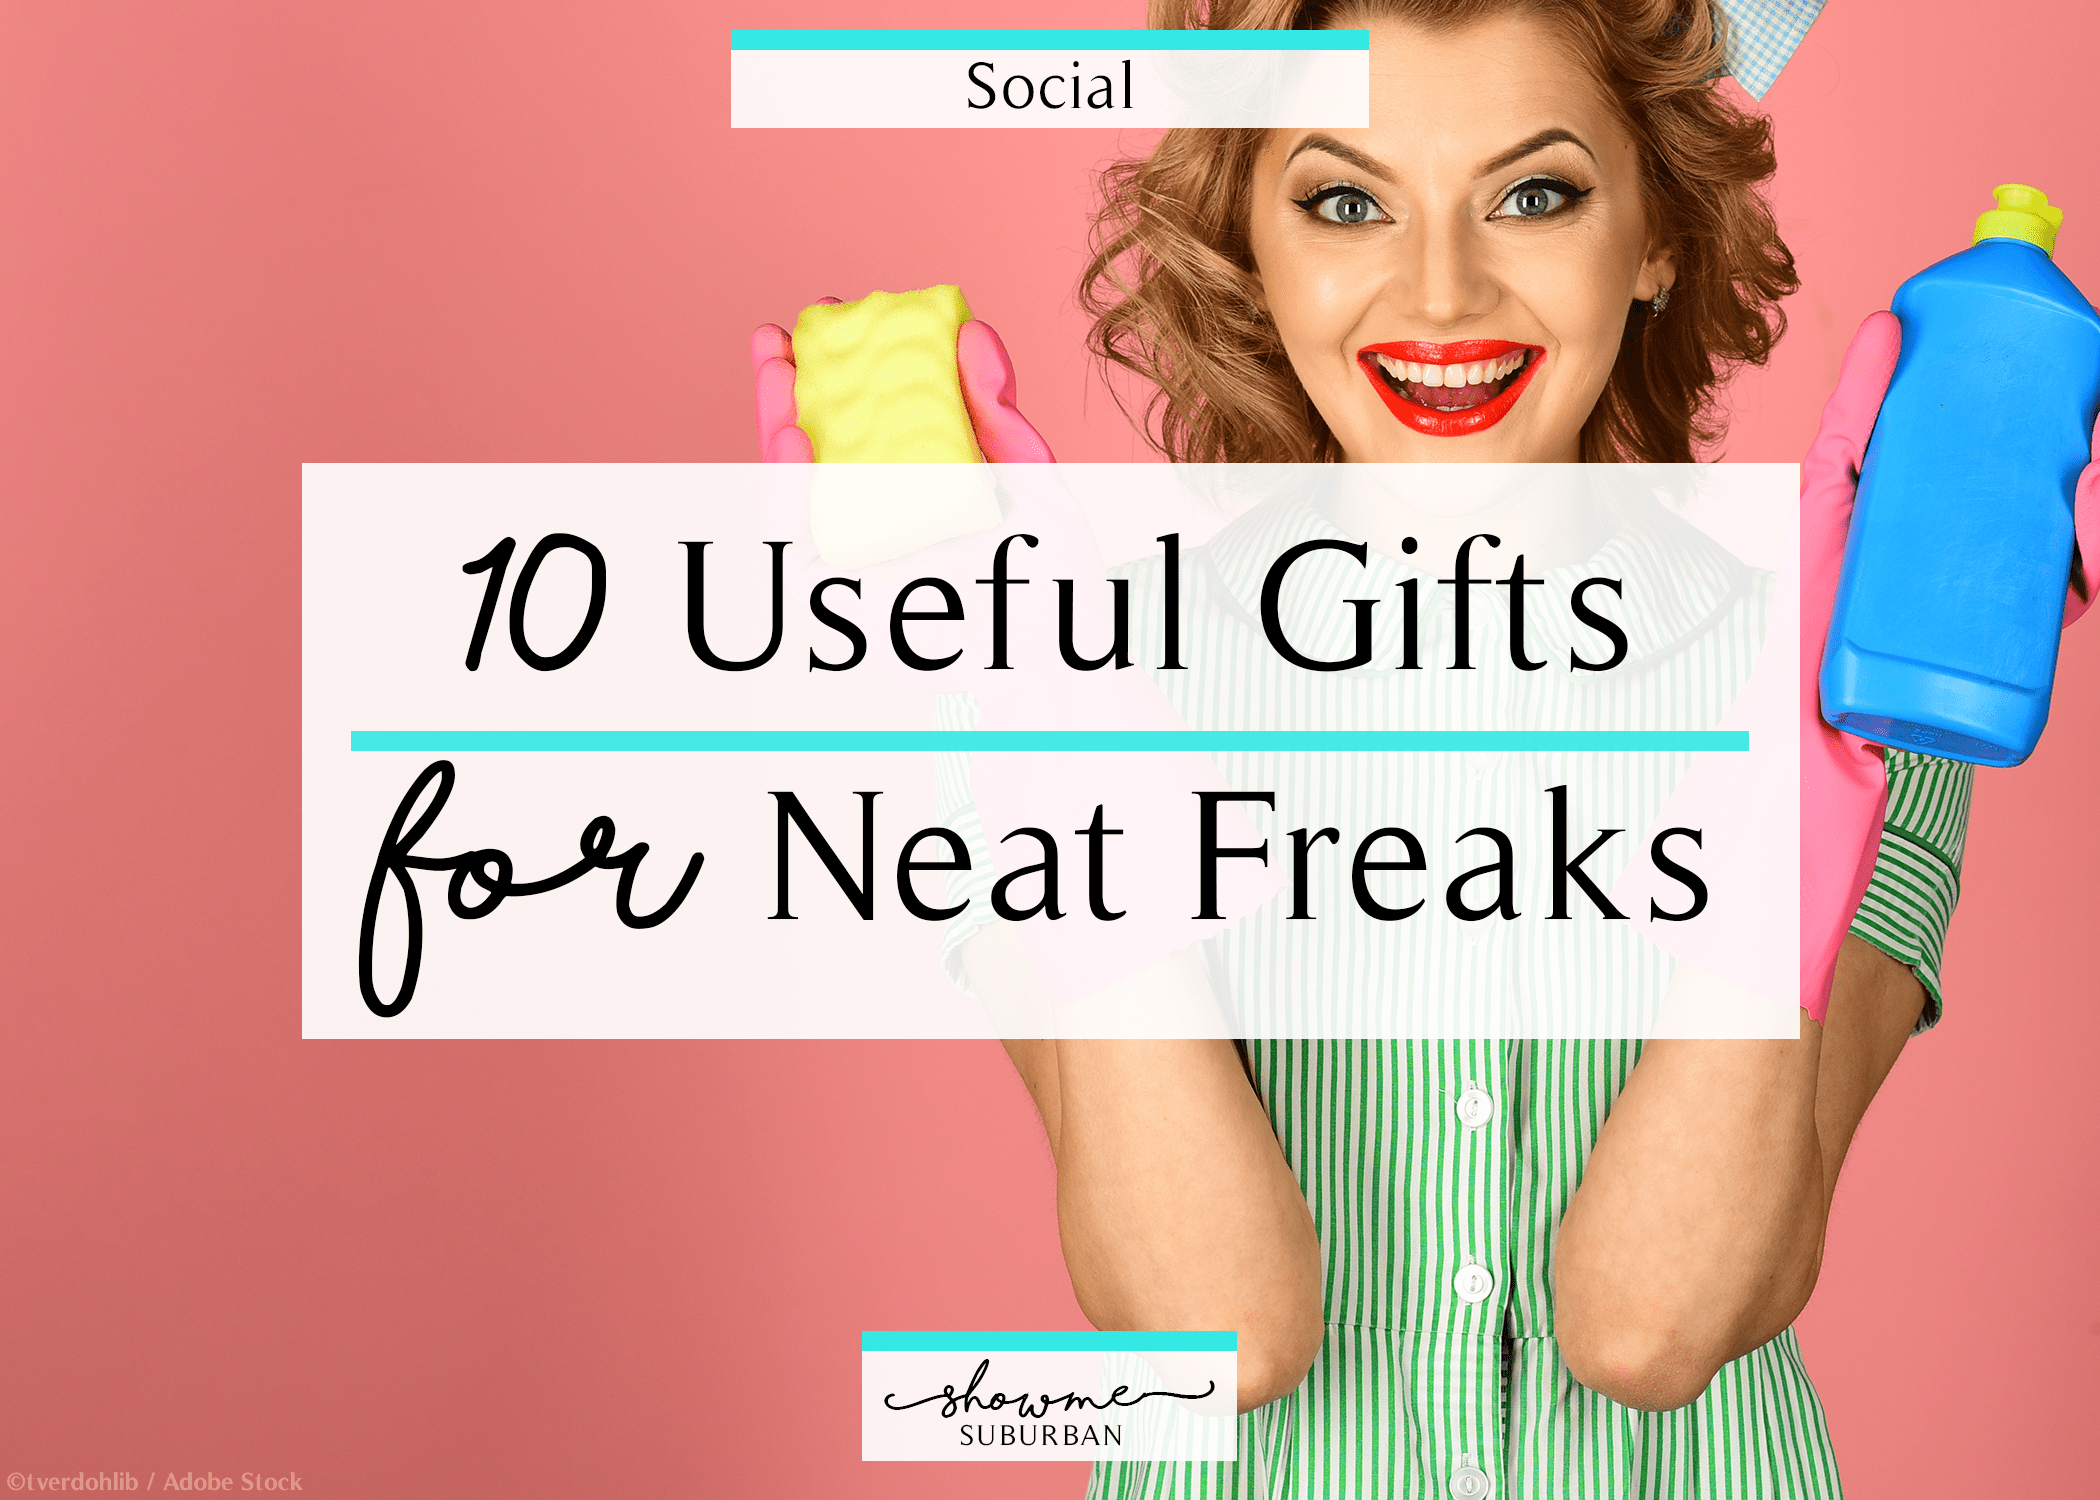 10 Useful Gift Ideas for Neat Freaks - ShowMe Suburban